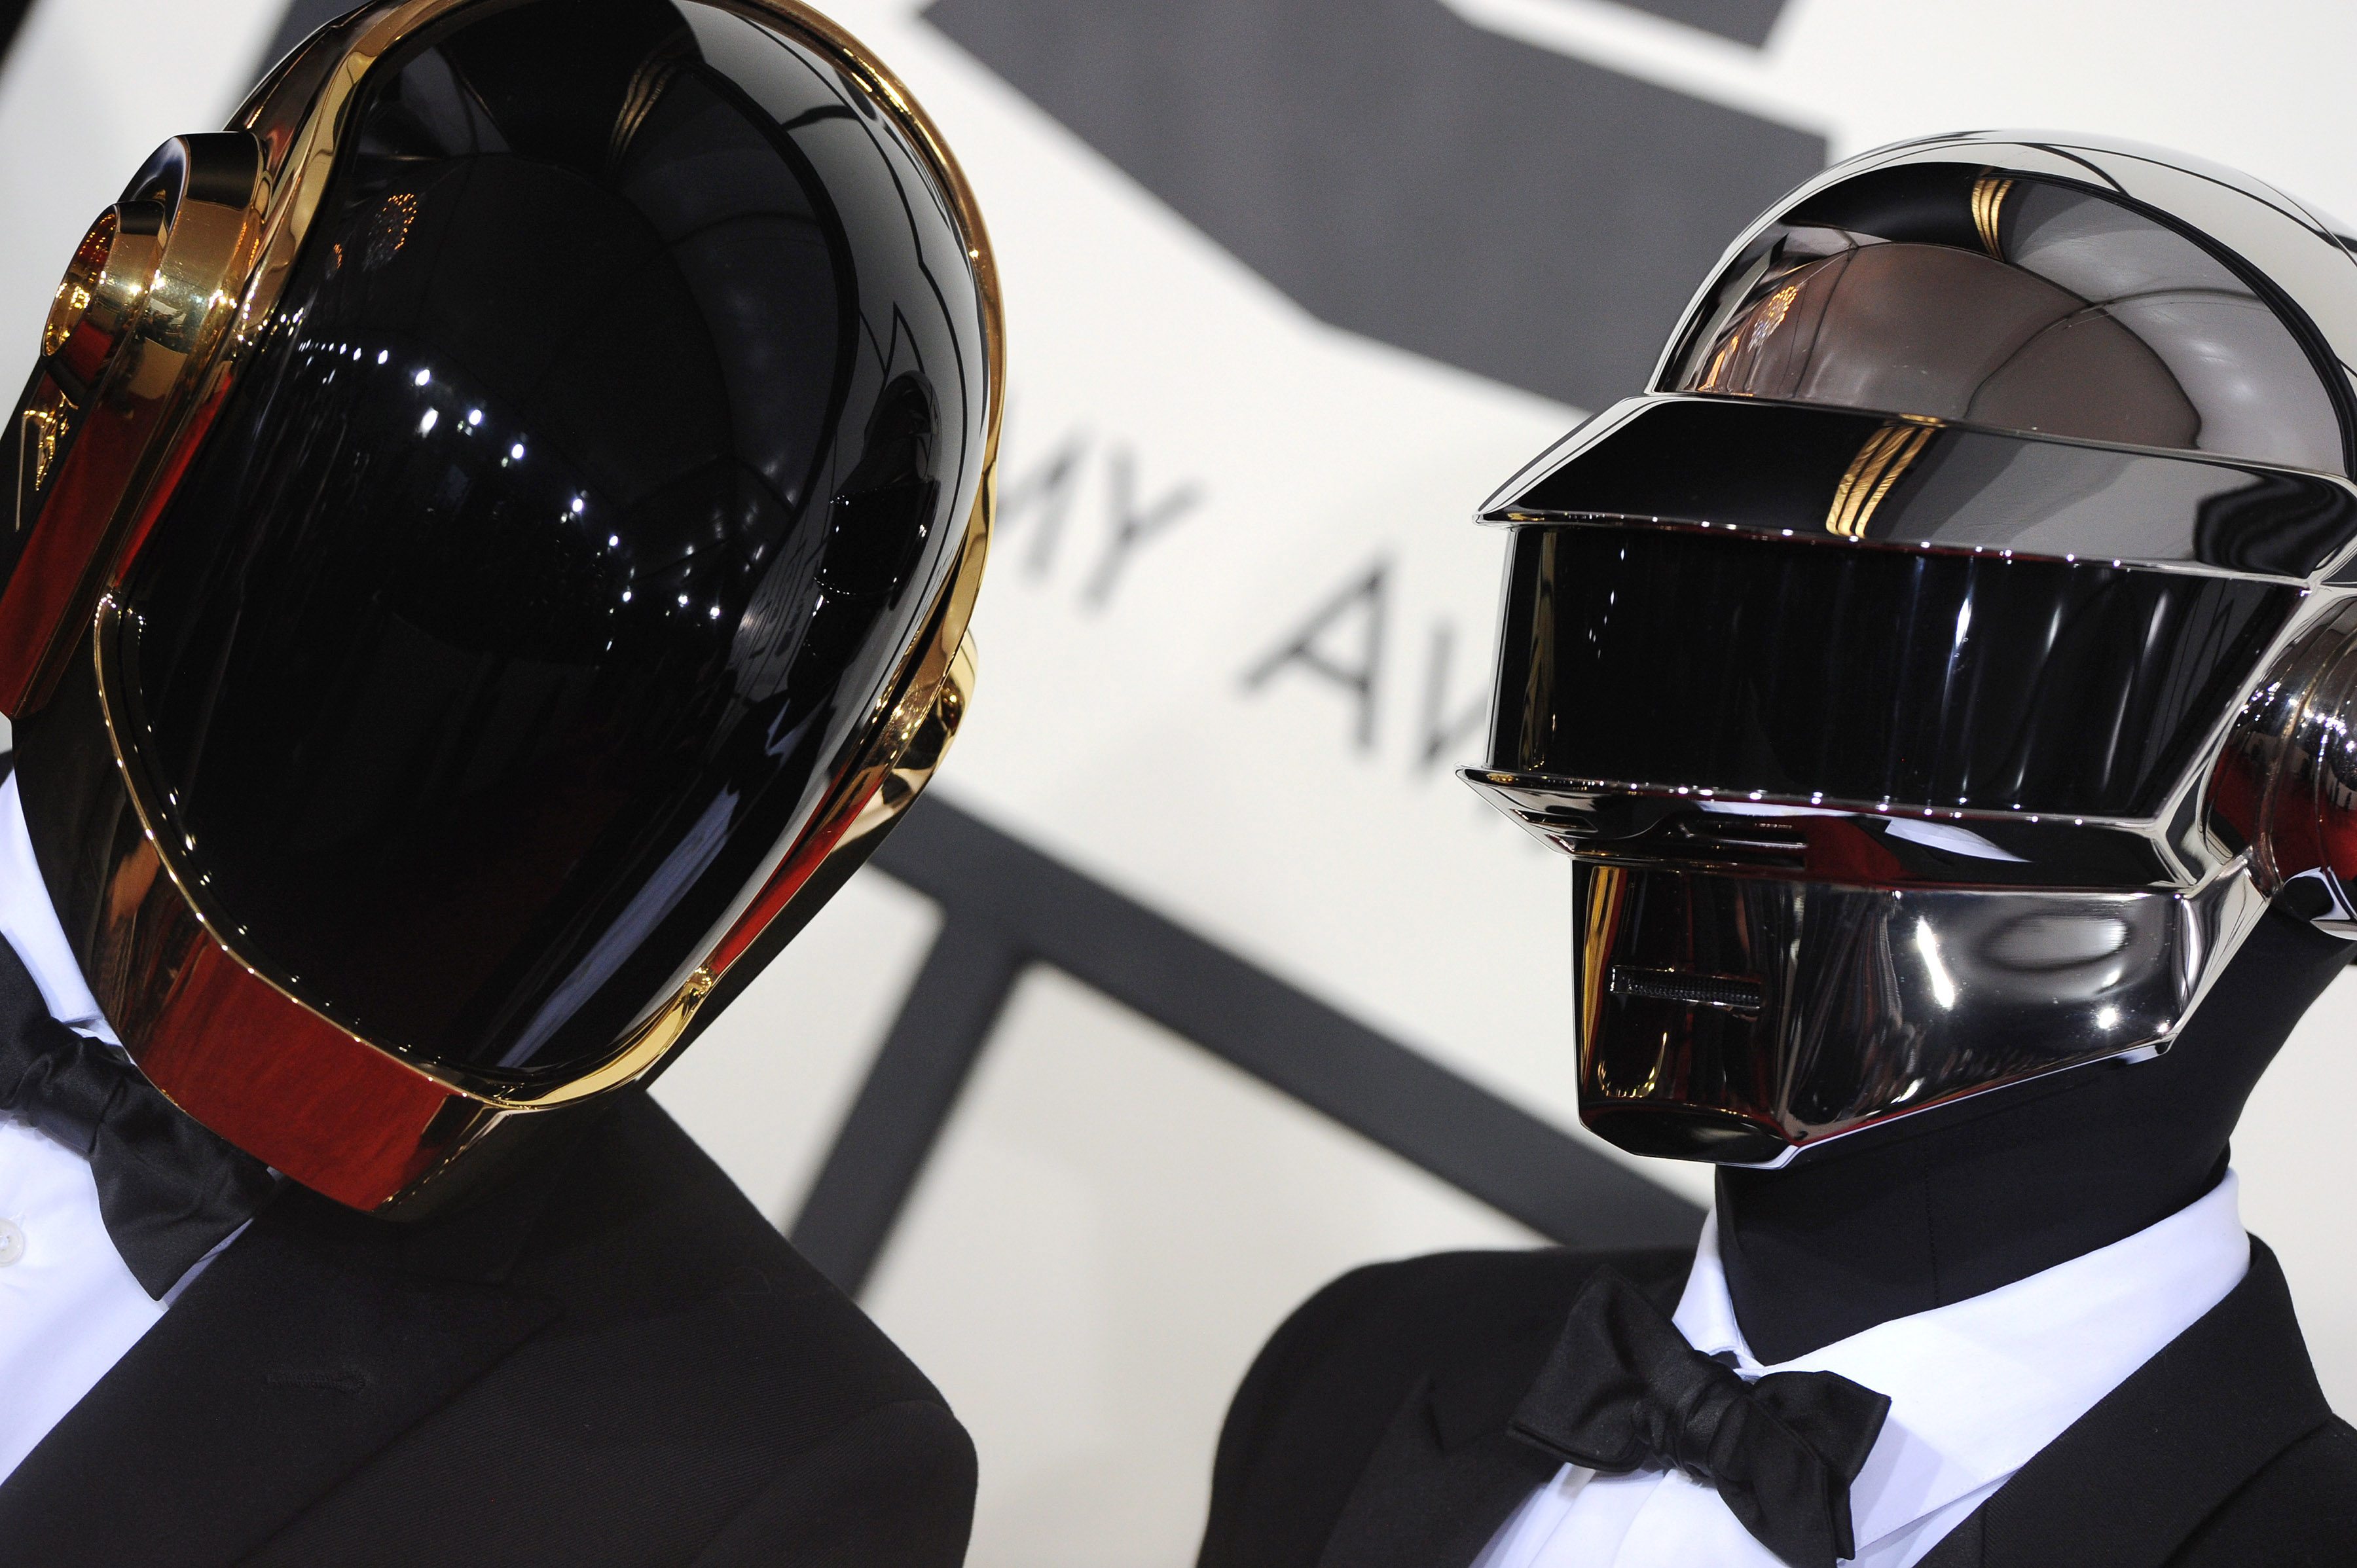 Daft Punk's Thomas Bangalter Says He's Glad He's No Longer A Robot